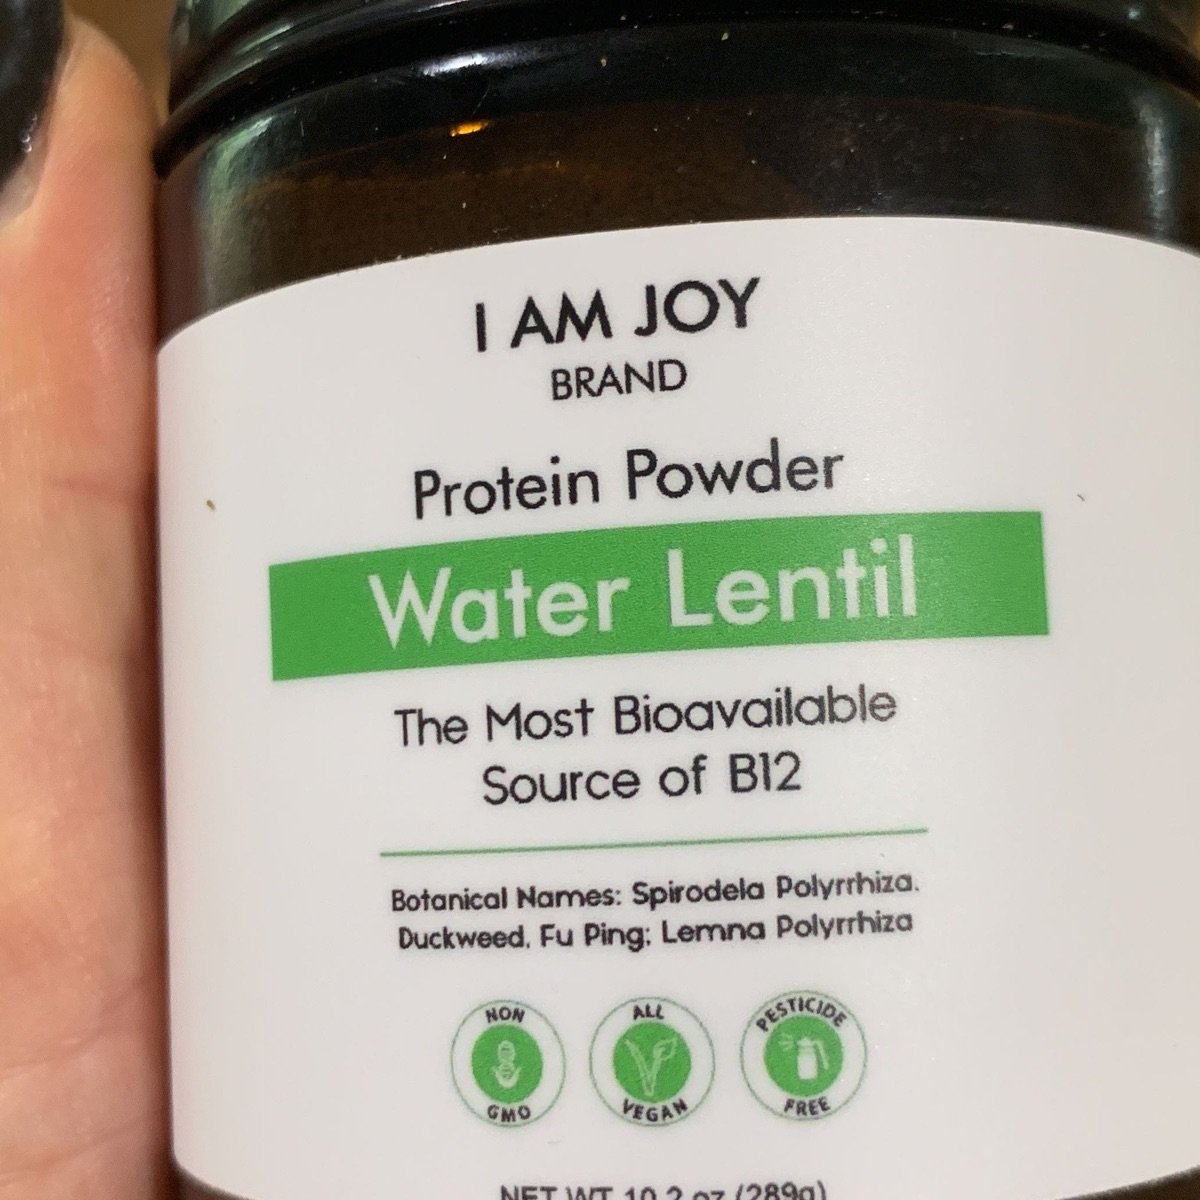 I am joy water lentil protein powder Reviews | abillion